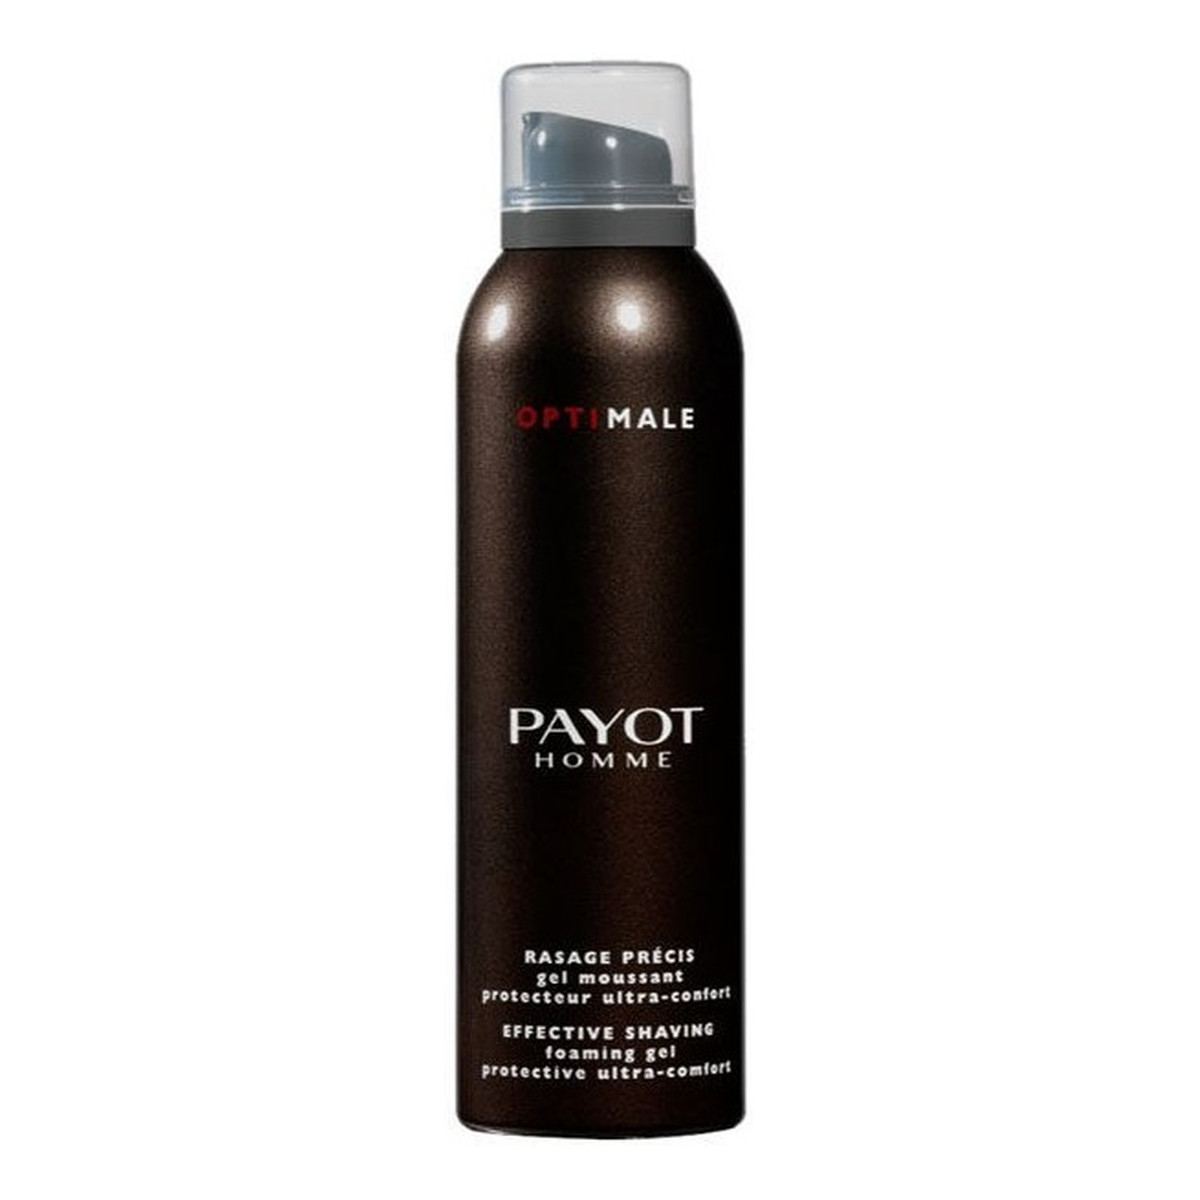 Payot Homme Optimale Rasage Precis Foaming Gel Protective Ultra-Comfort Ochronny i komfortowy żel do golenia 100ml